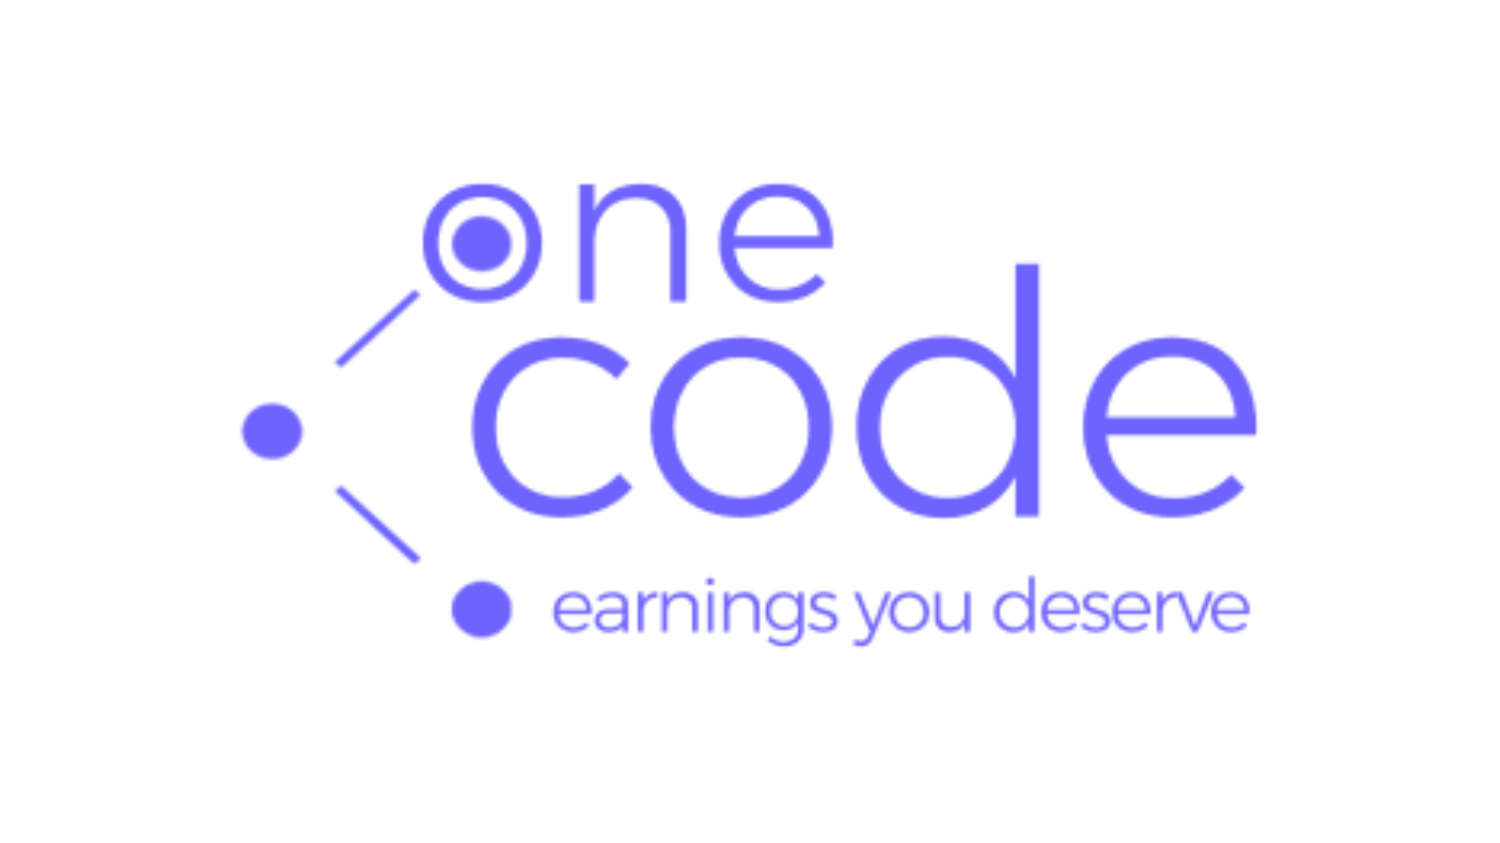 Onecode